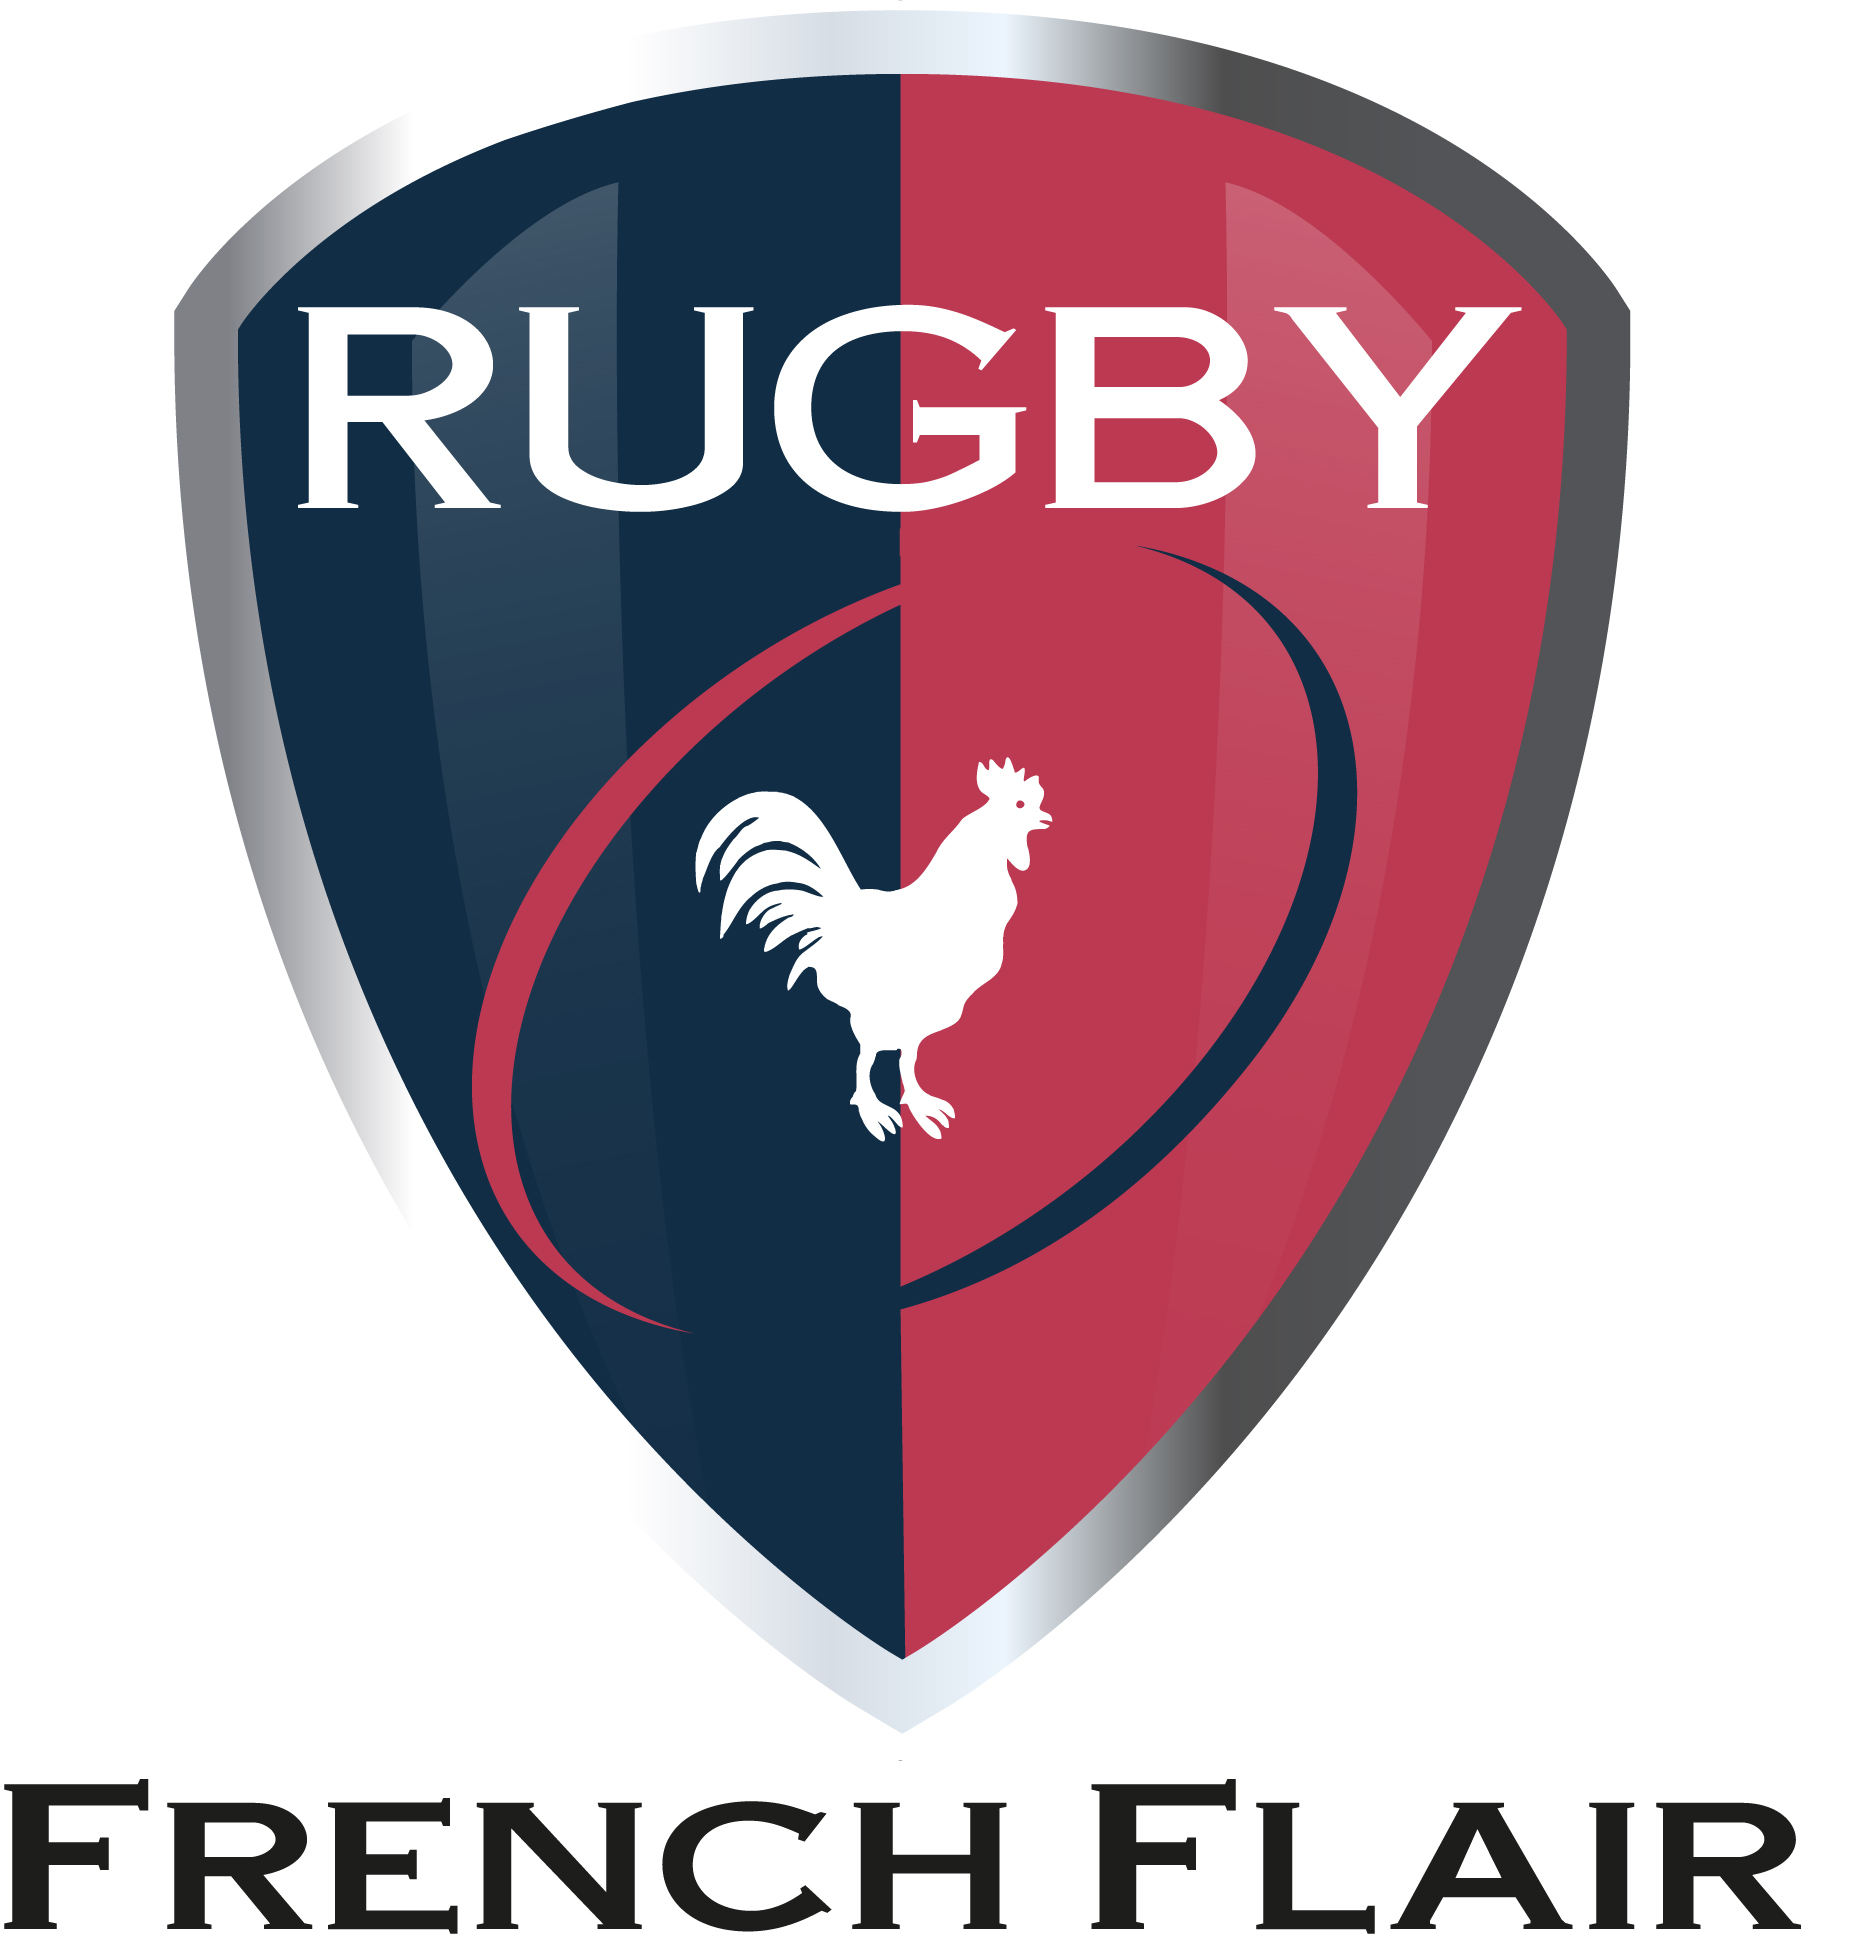 association-rugby-french-flair-logo-633459cf97950100561181.jpg